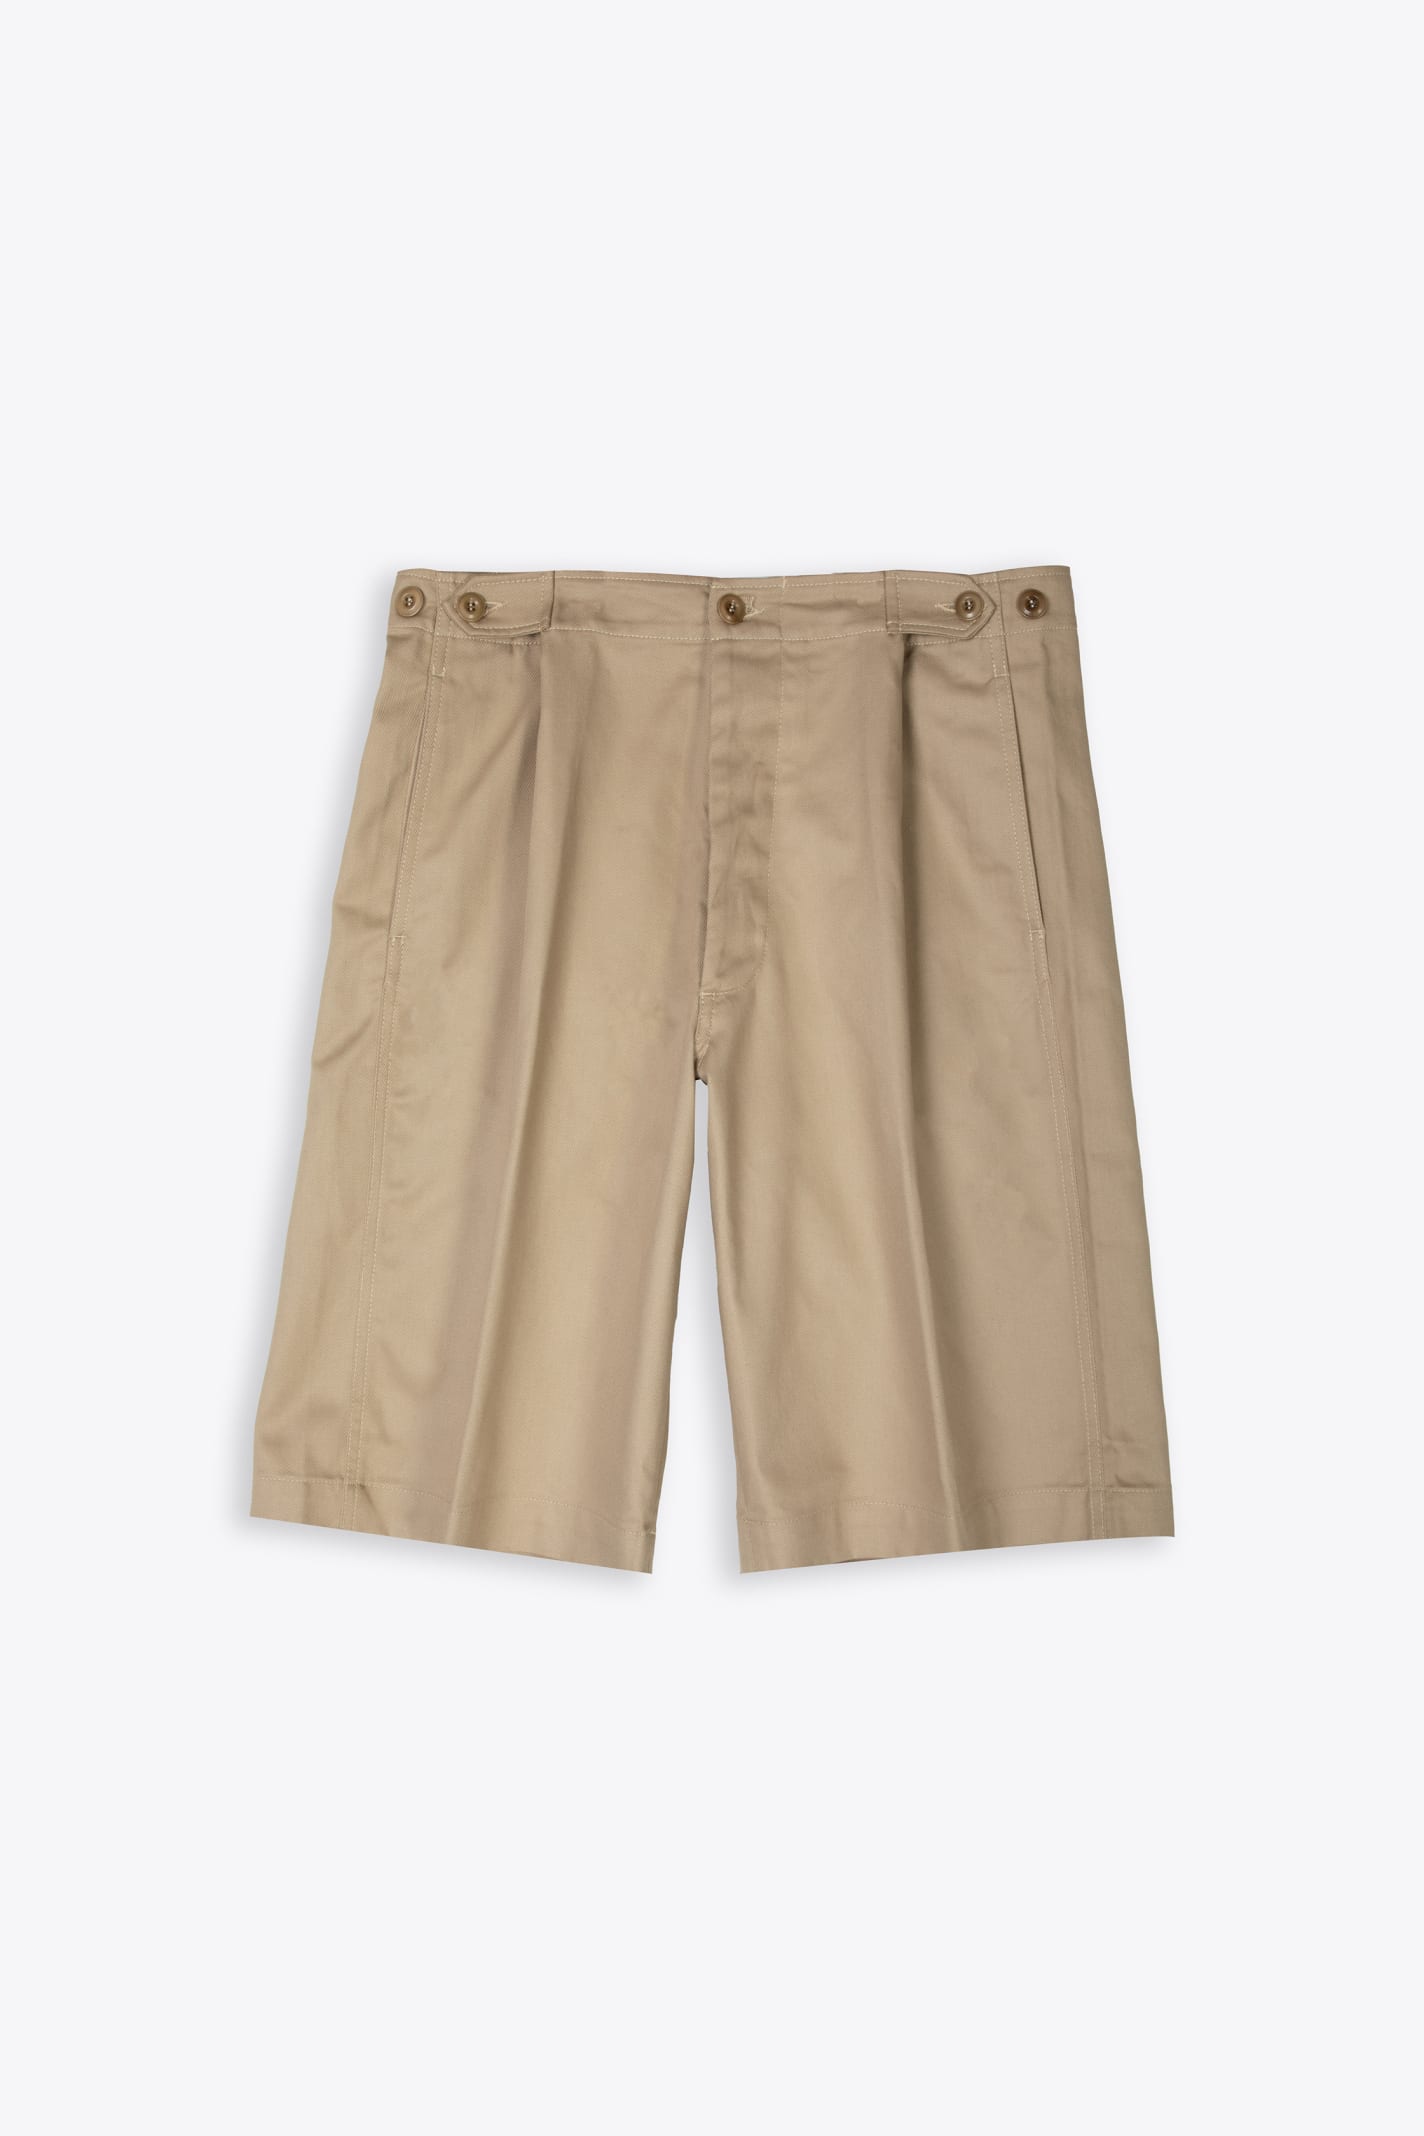 Cellar Door Dino Short Beige cotton short with adjustable waist - Dino short